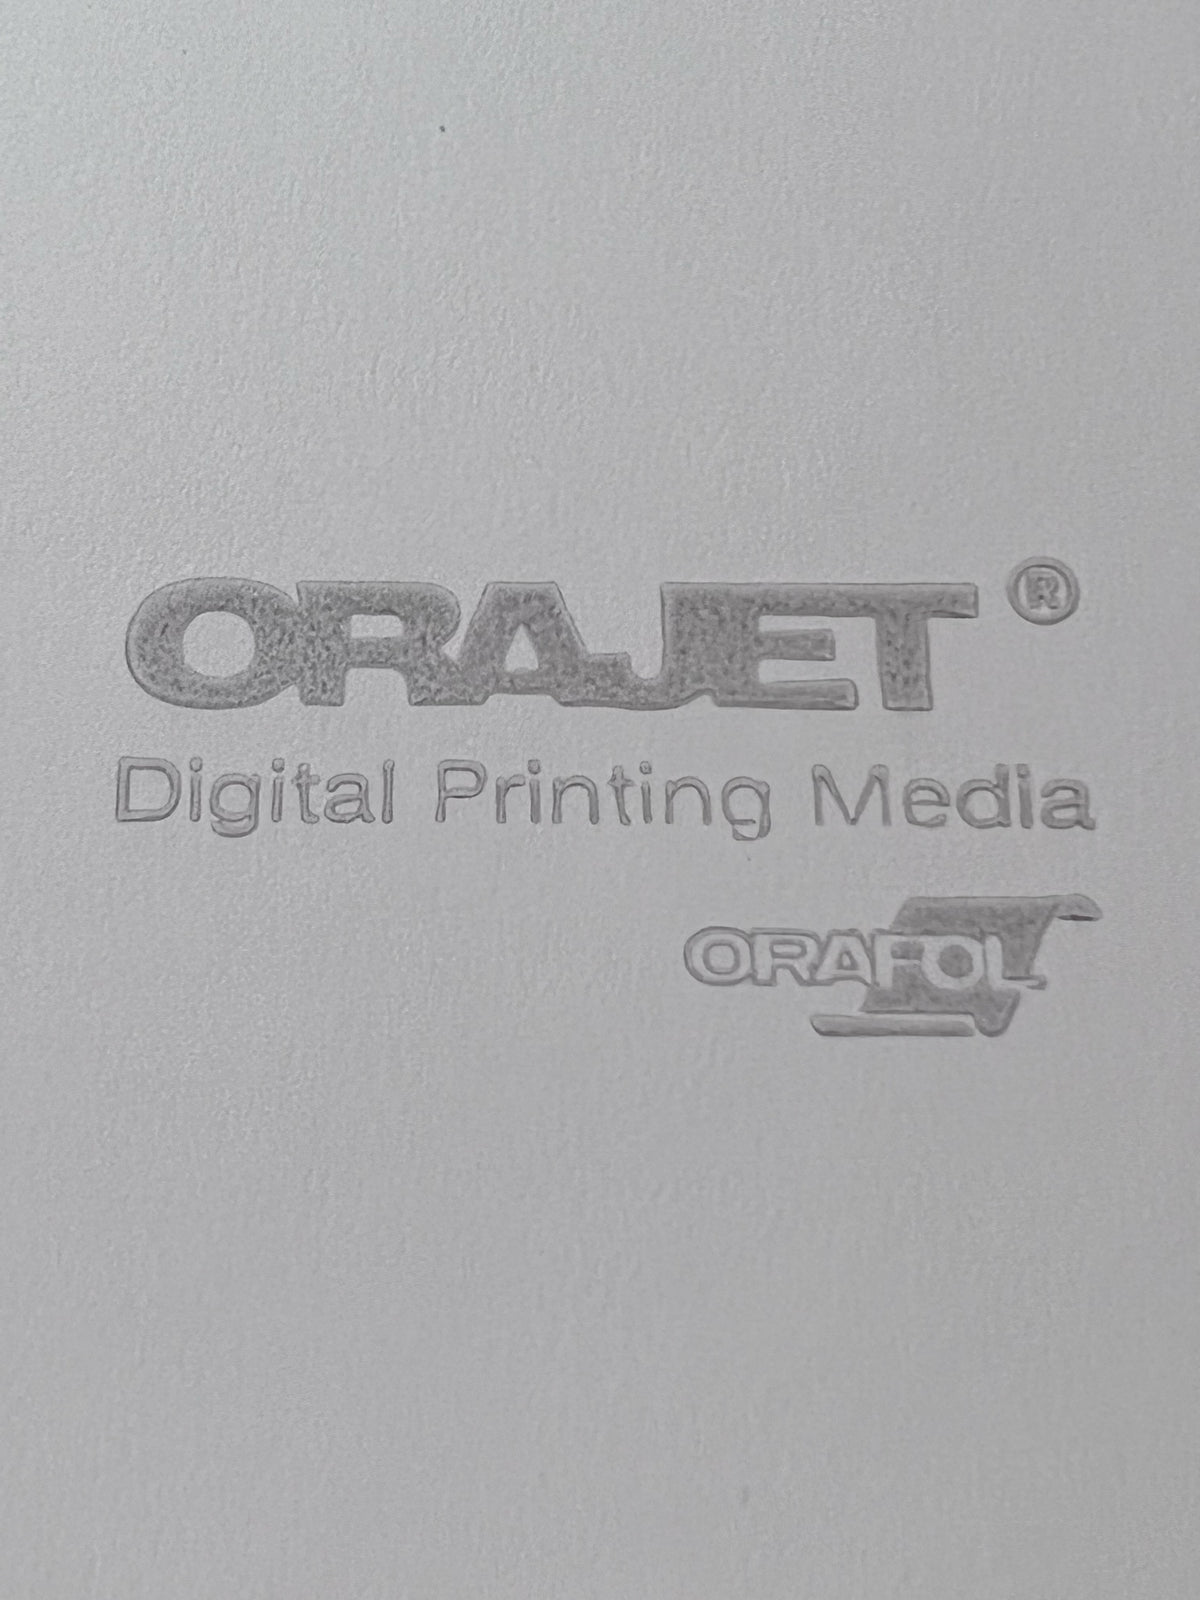 Printable Vinyl - Orajet